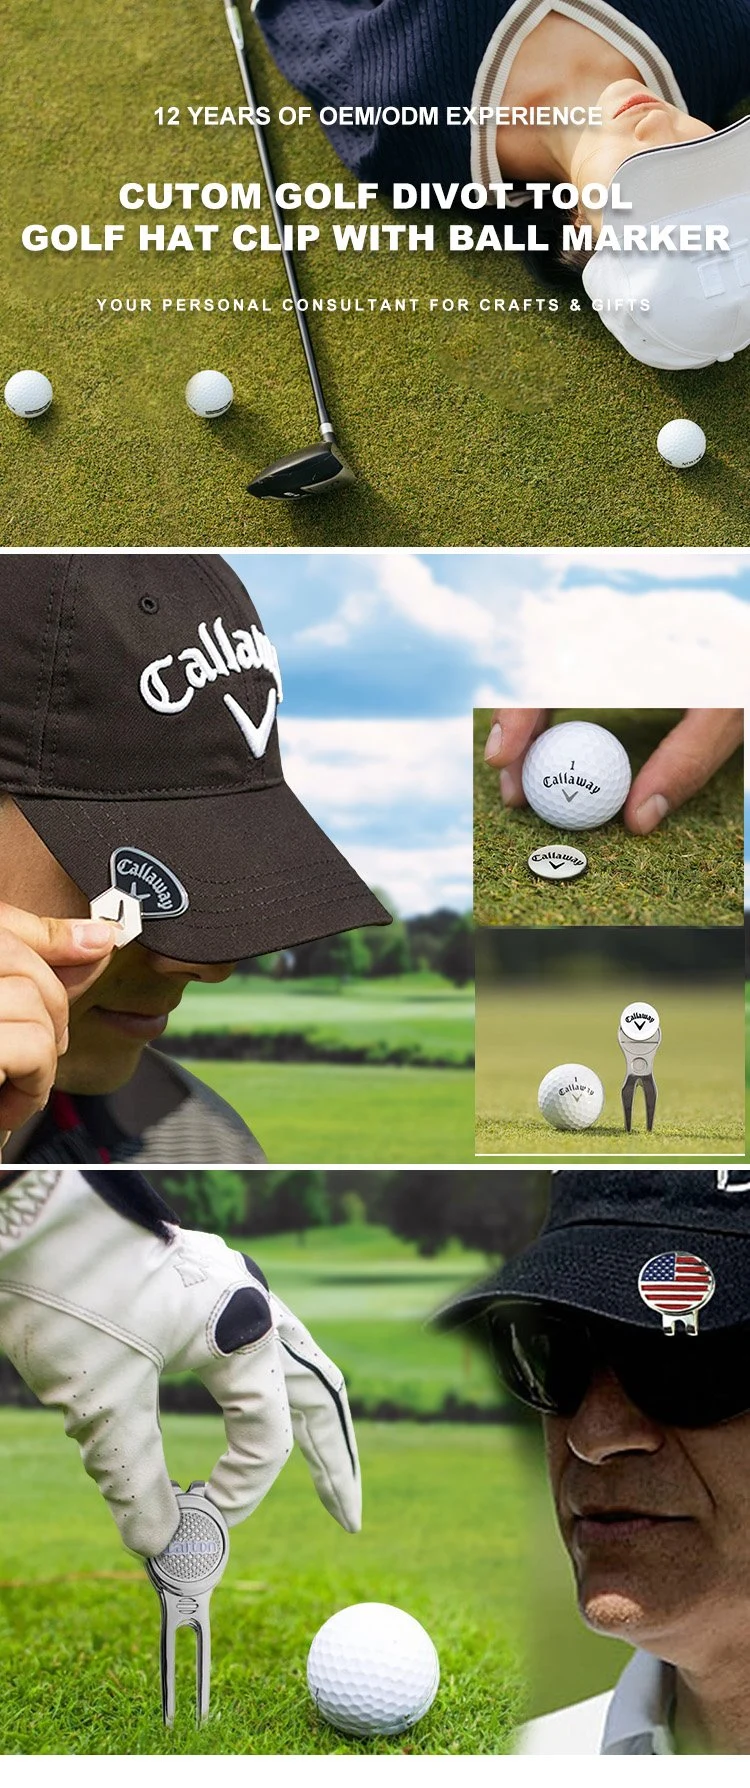 Good Quality Left Handed Clubs Driving Range Balls Netting Wedge Putter Cover Mini Club Custom Blank Magnet Callaway Golf Ball Marker